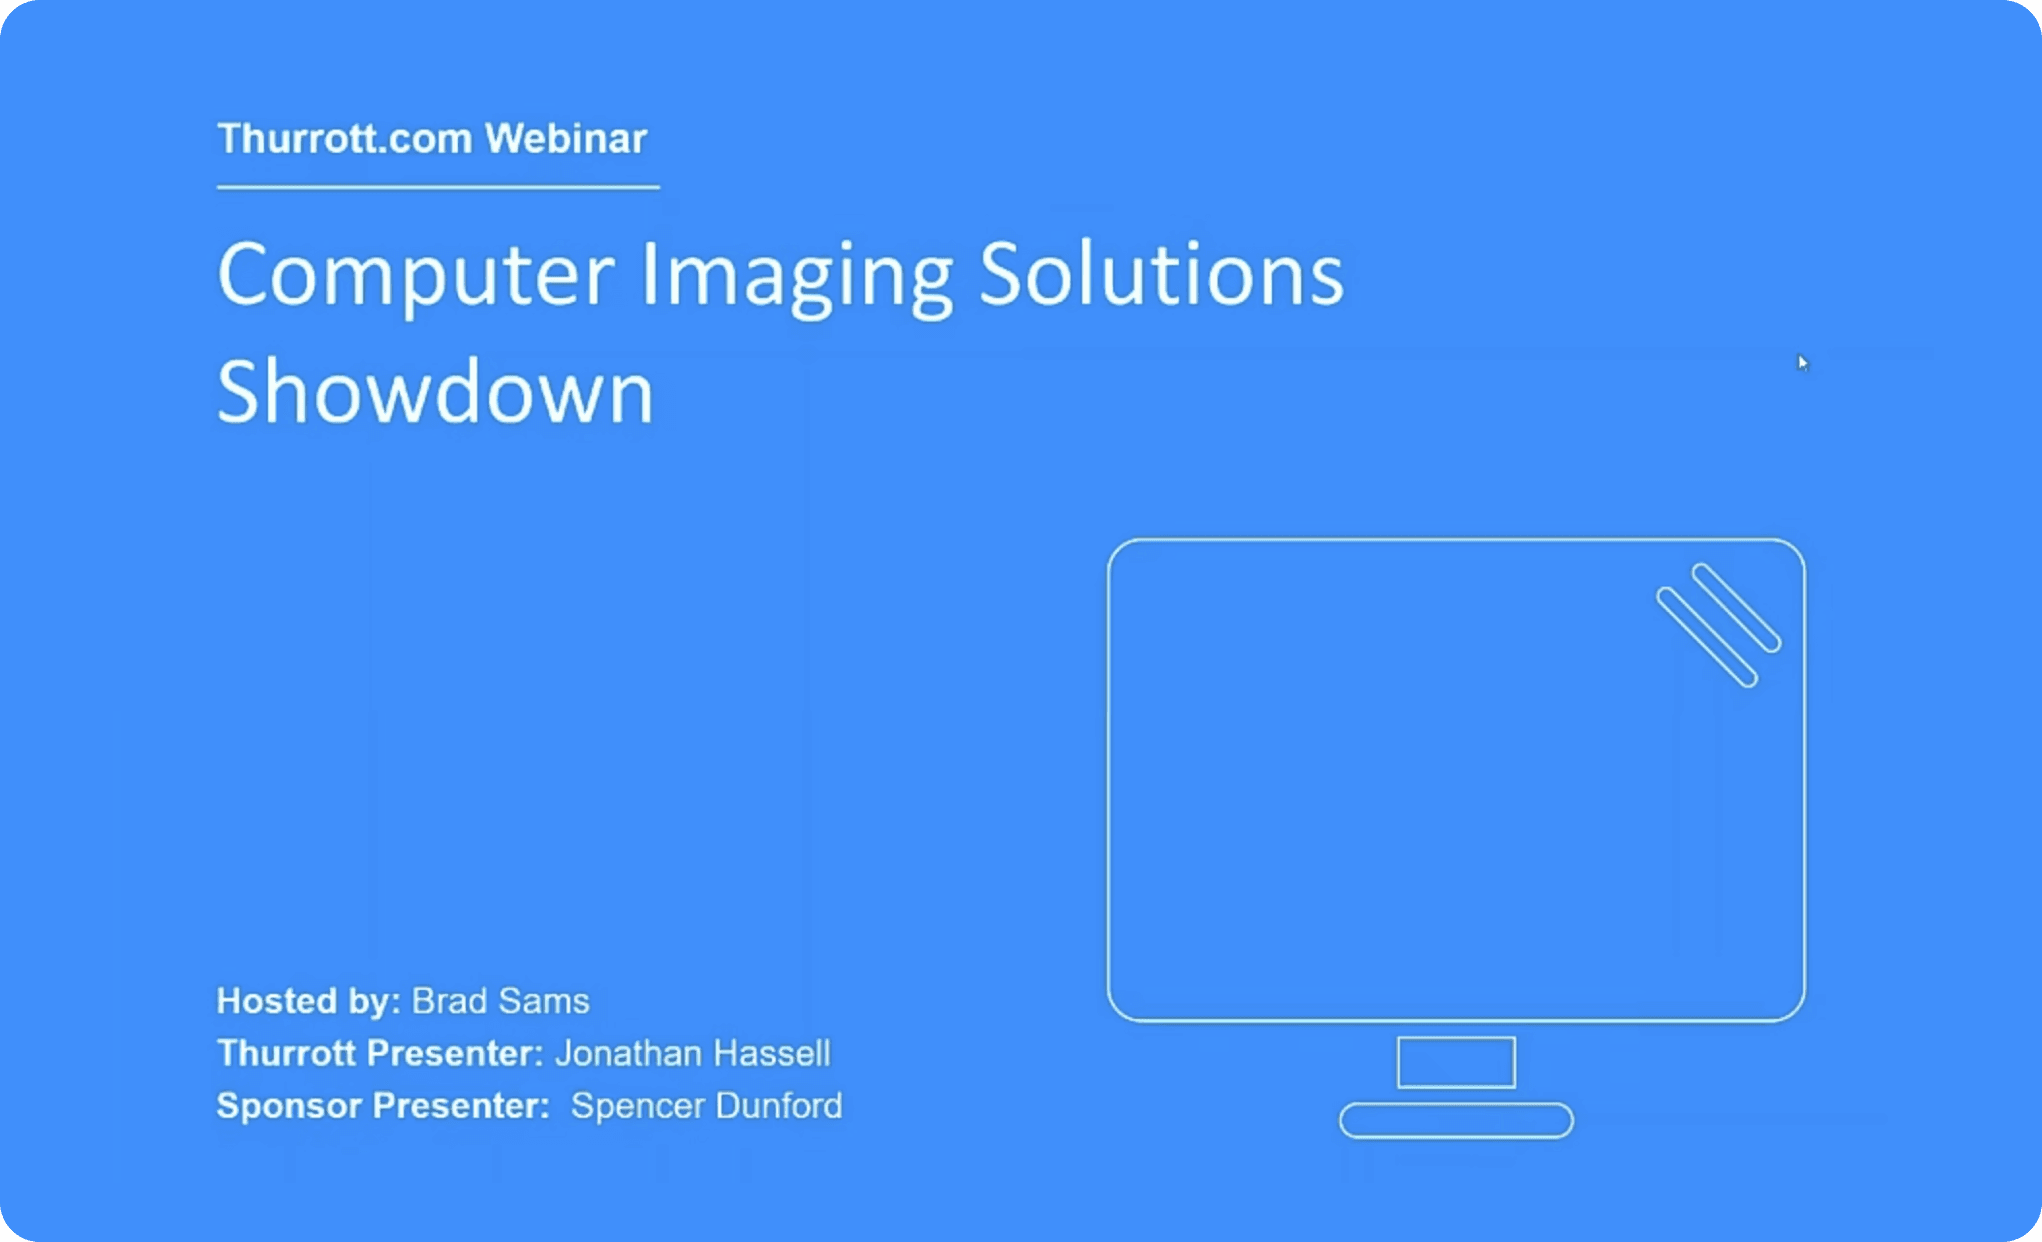 Computer imaging solutions showdown